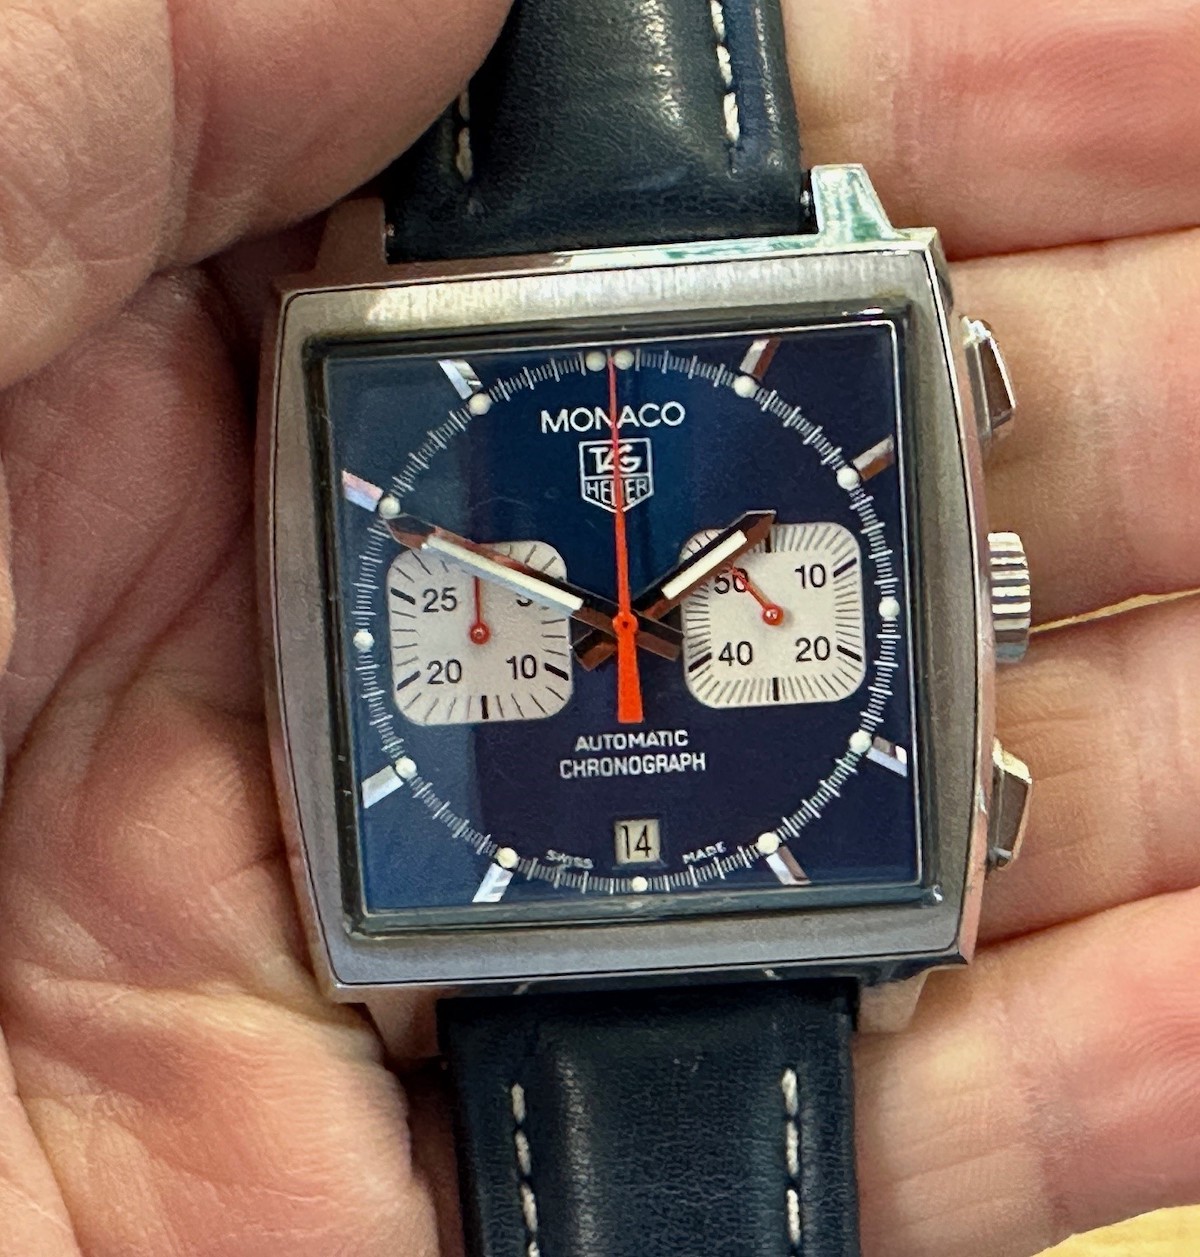 The Tag Heuer Monaco Steve McQueen vintage watch